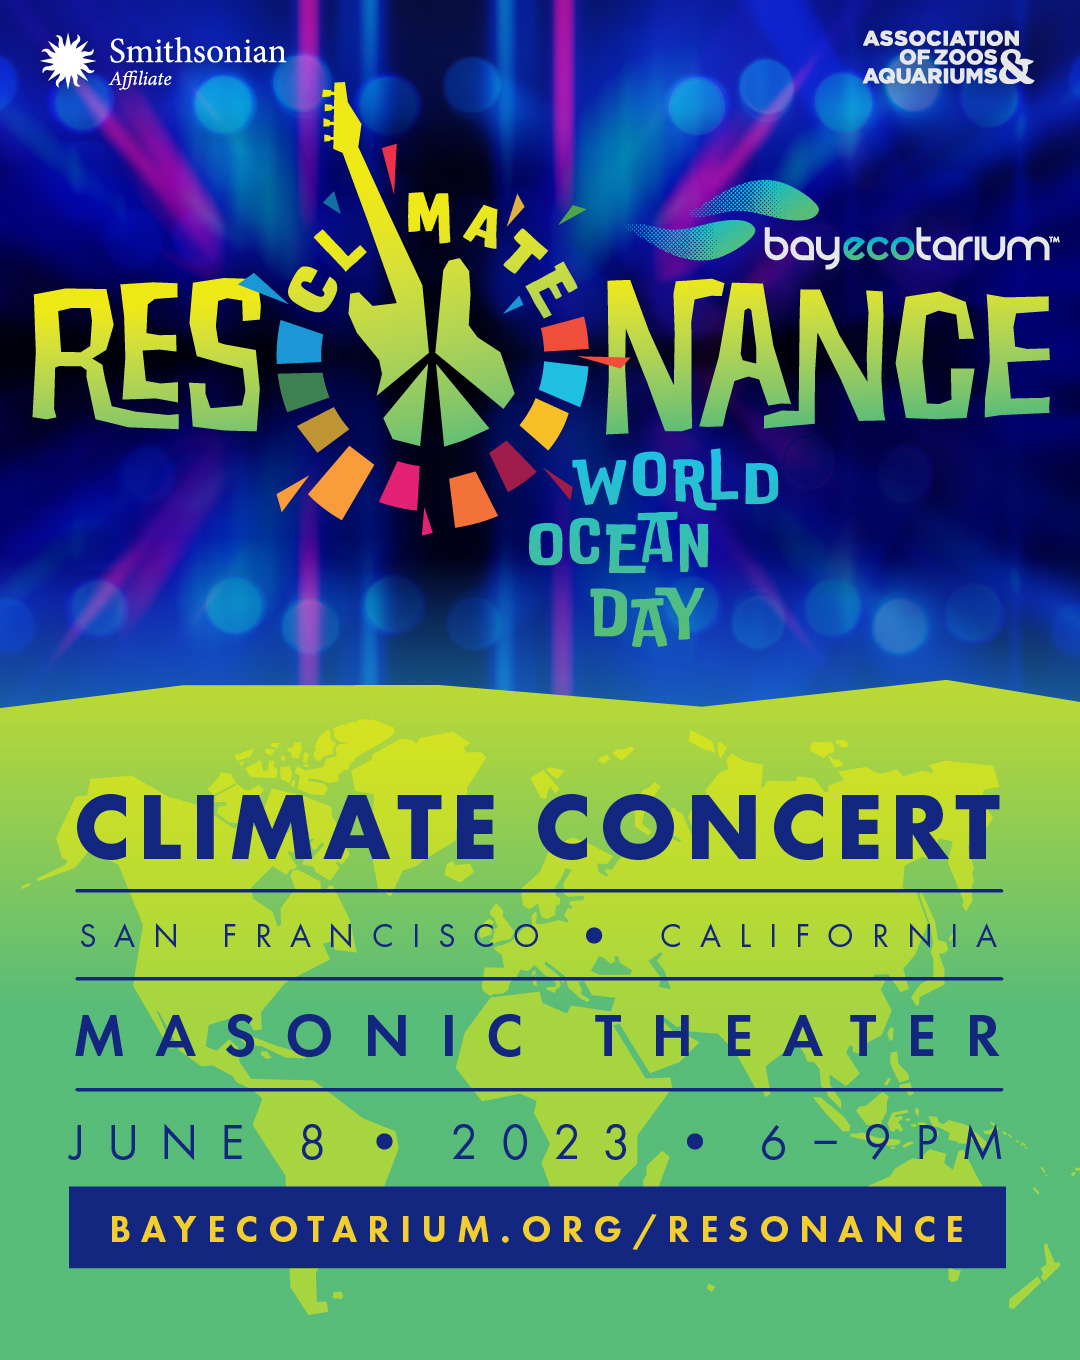 Resonance, World Ocean Day Climate Concert, June 8, 2023, San Francisco, Masonic Theater, 6-9pm